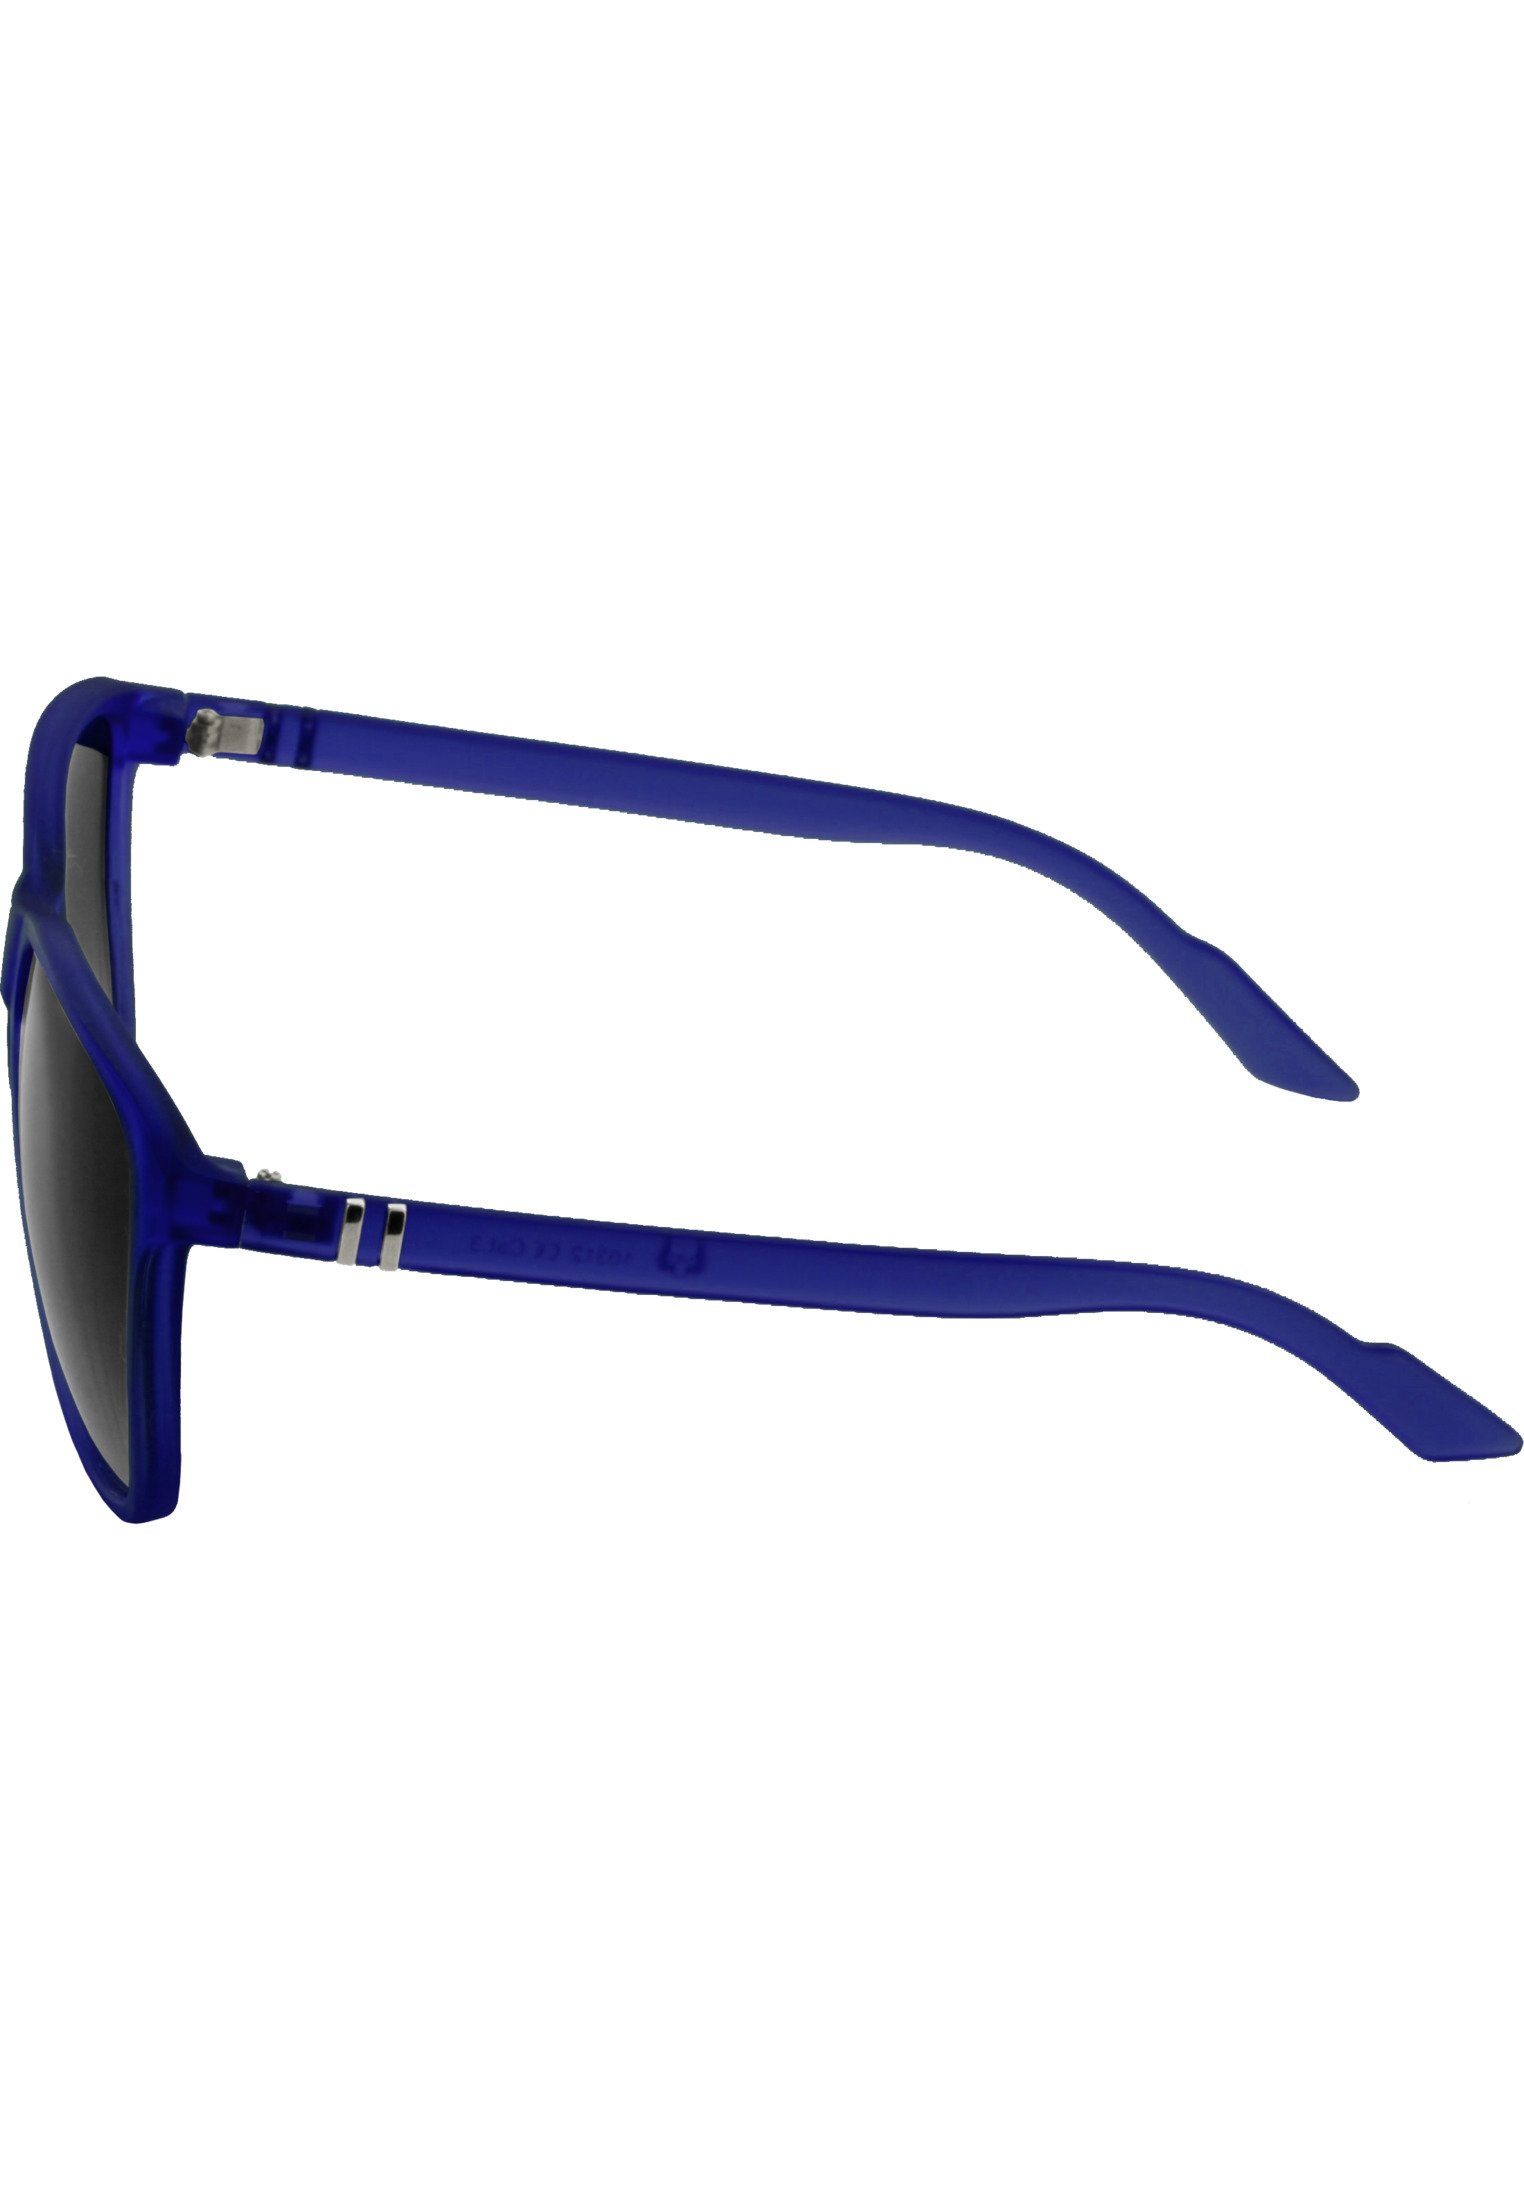 MSTRDS Sonnenbrille Accessoires Chirwa Sunglasses royal